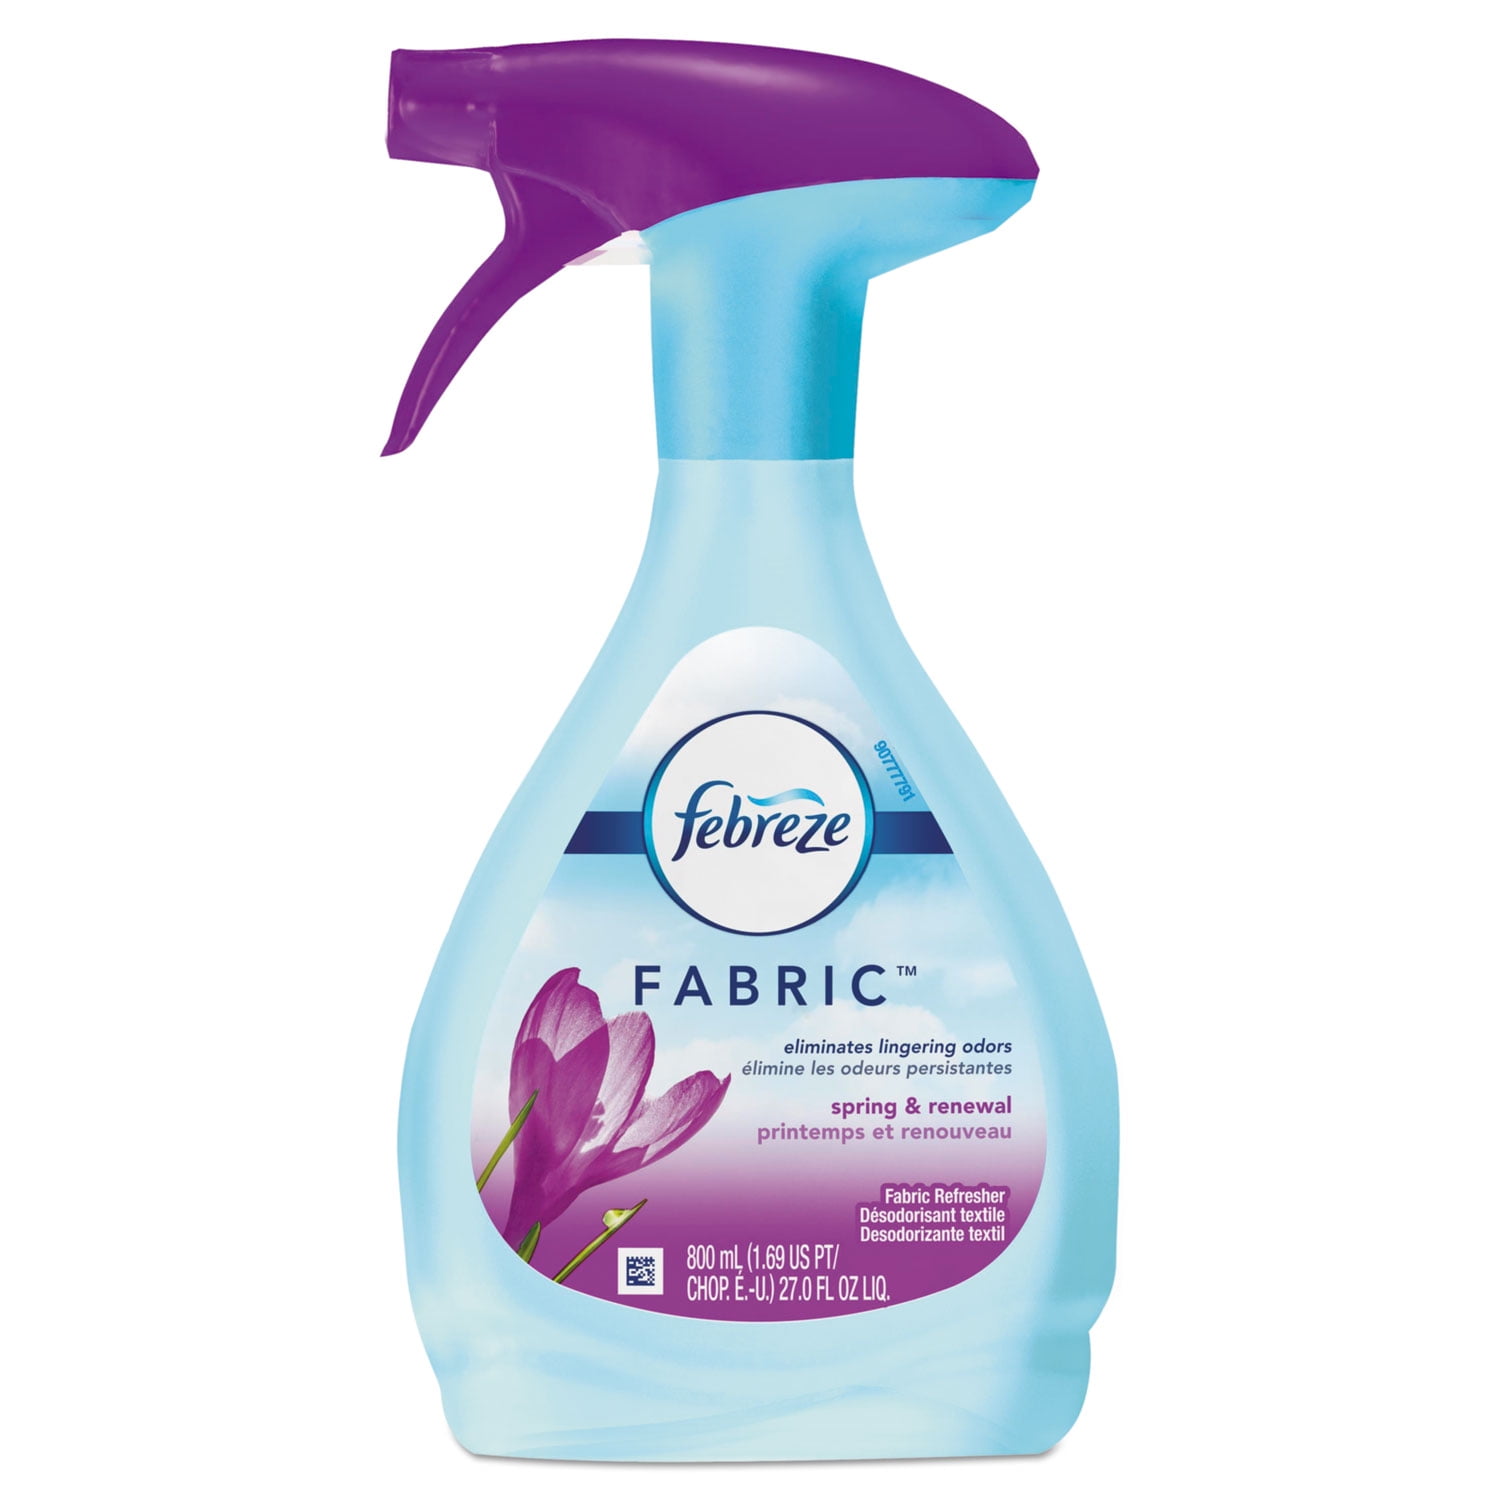 2 Pack Febreze Odor-Eliminating Lenor Spring Air Freshener Spray 10.14 oz.  , Bundle Deal 